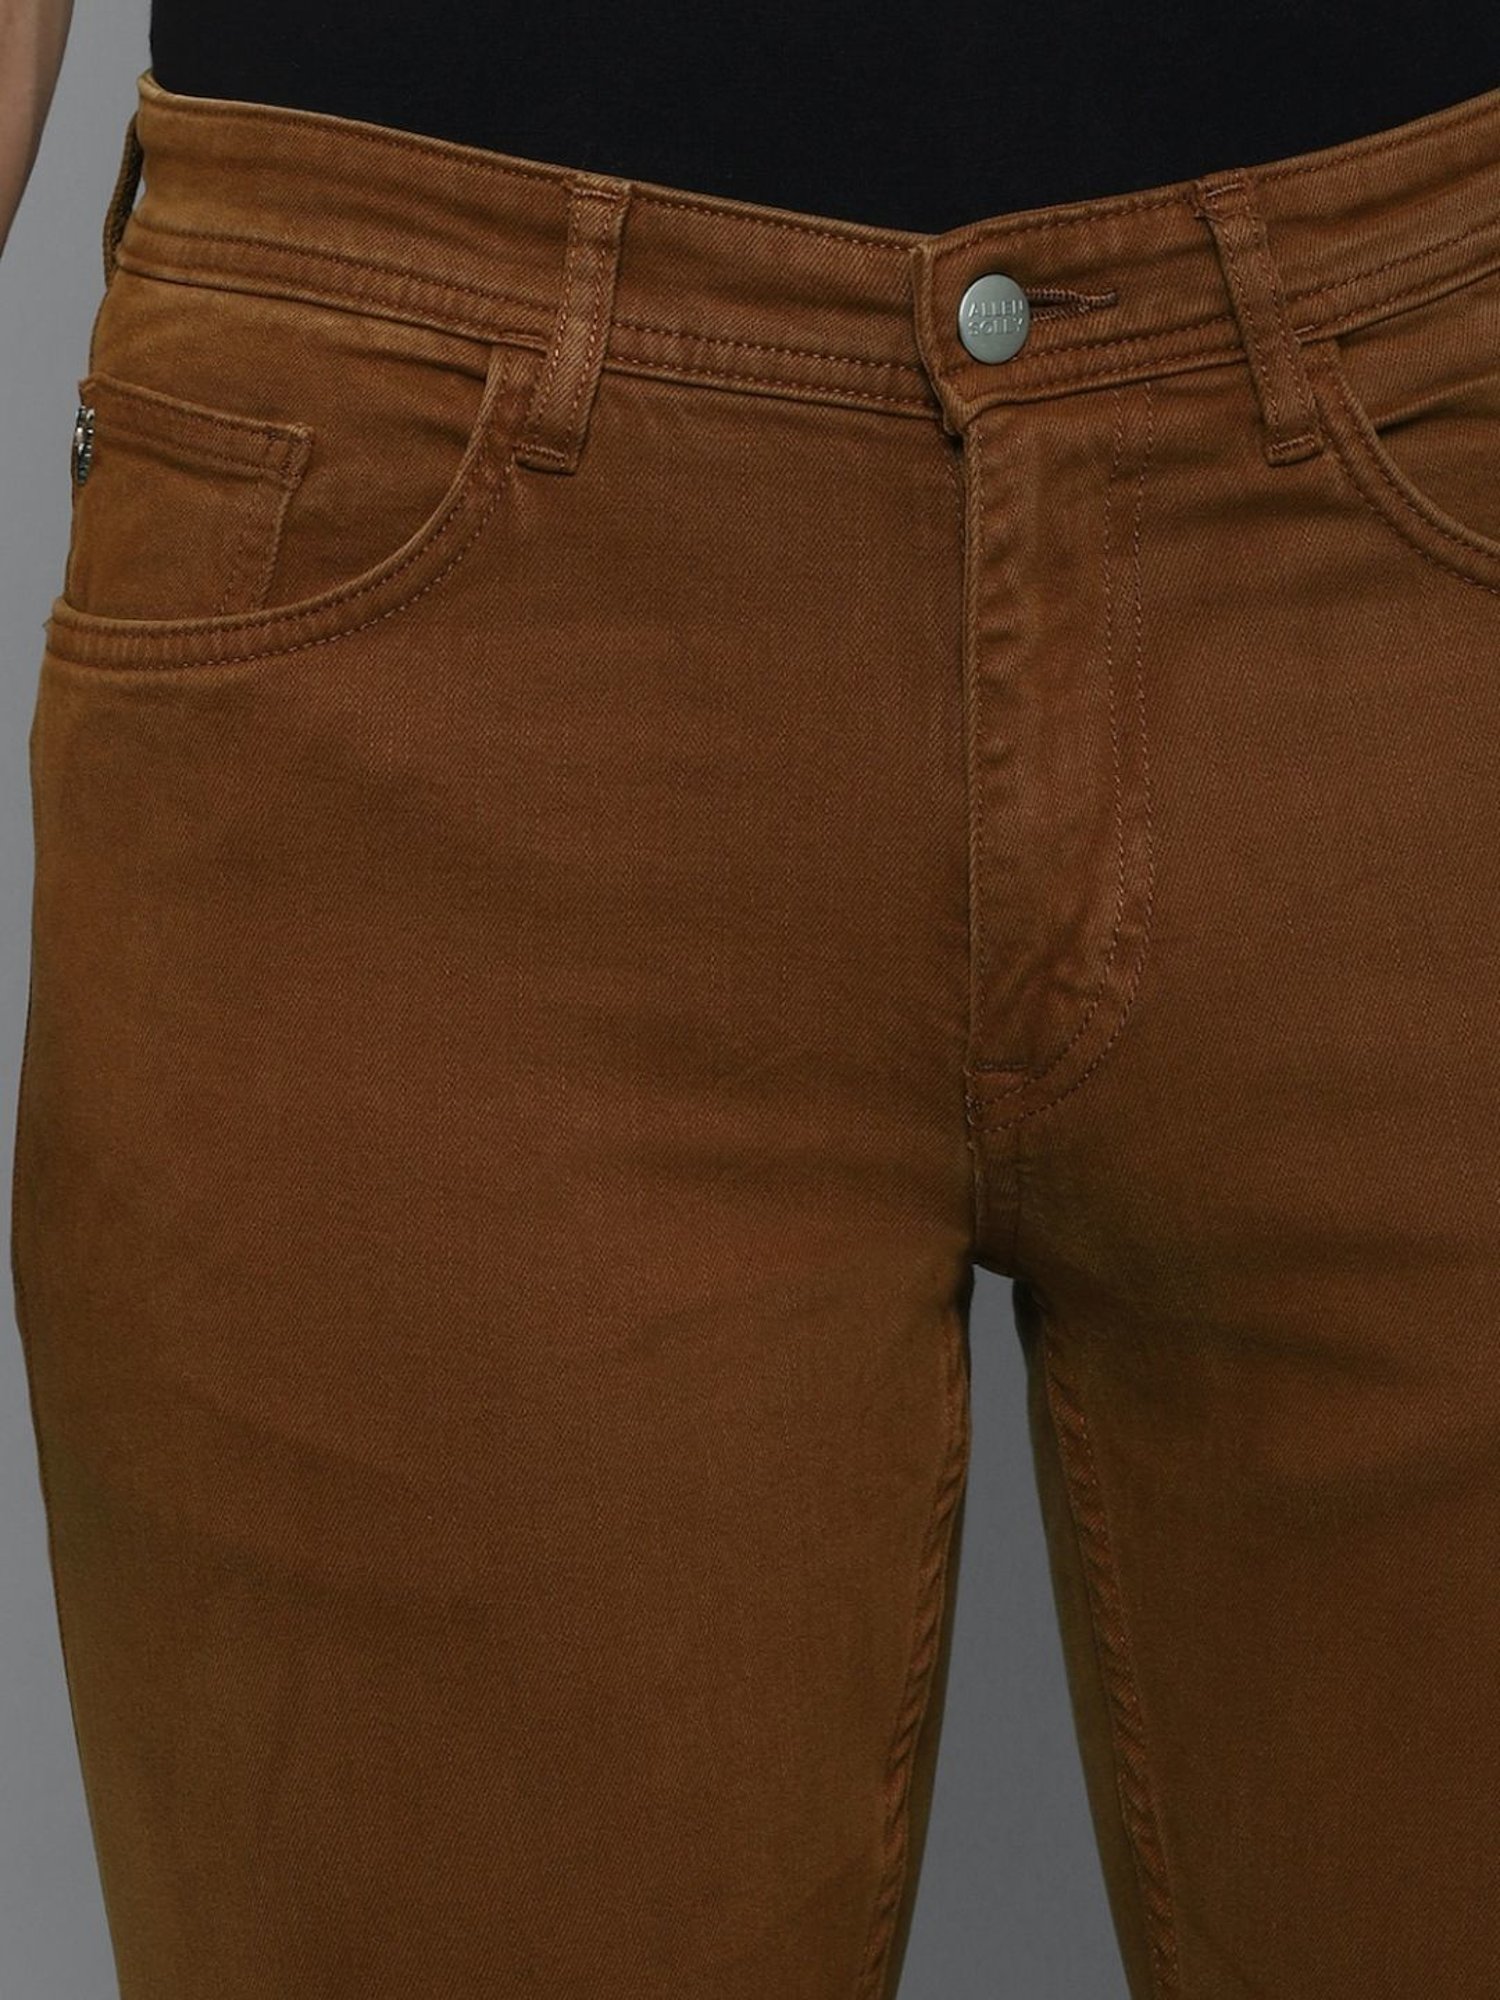 Mens Baggy Pant at Rs 799/piece | Men Regular Fit Pants in Perinthalmanna |  ID: 2851903739512